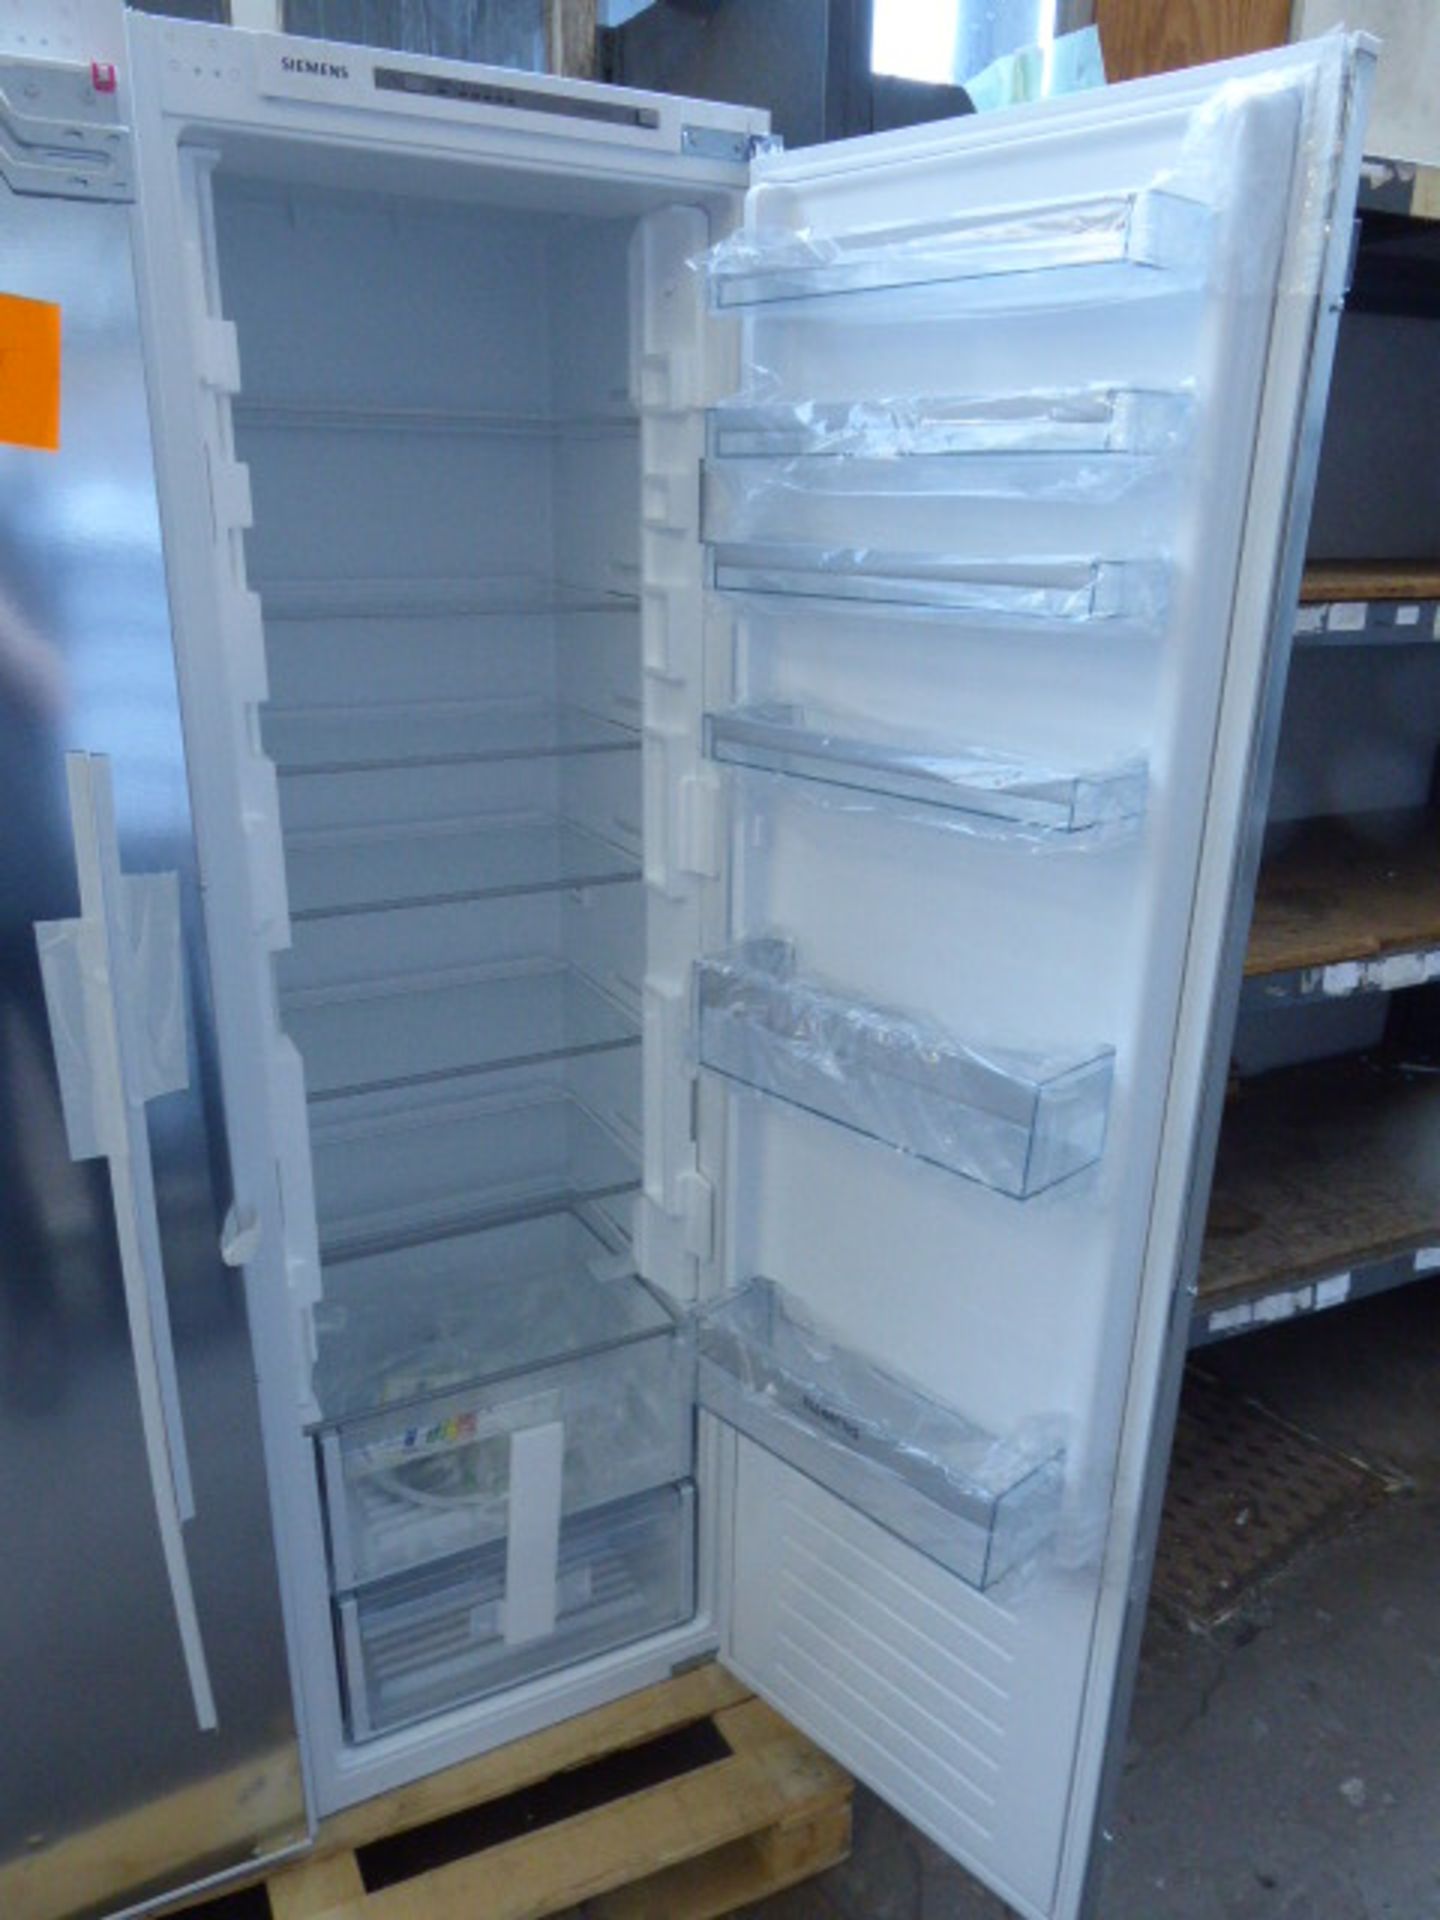 KI81RVSF0GB Siemens Built-in larder fridge - Image 2 of 3